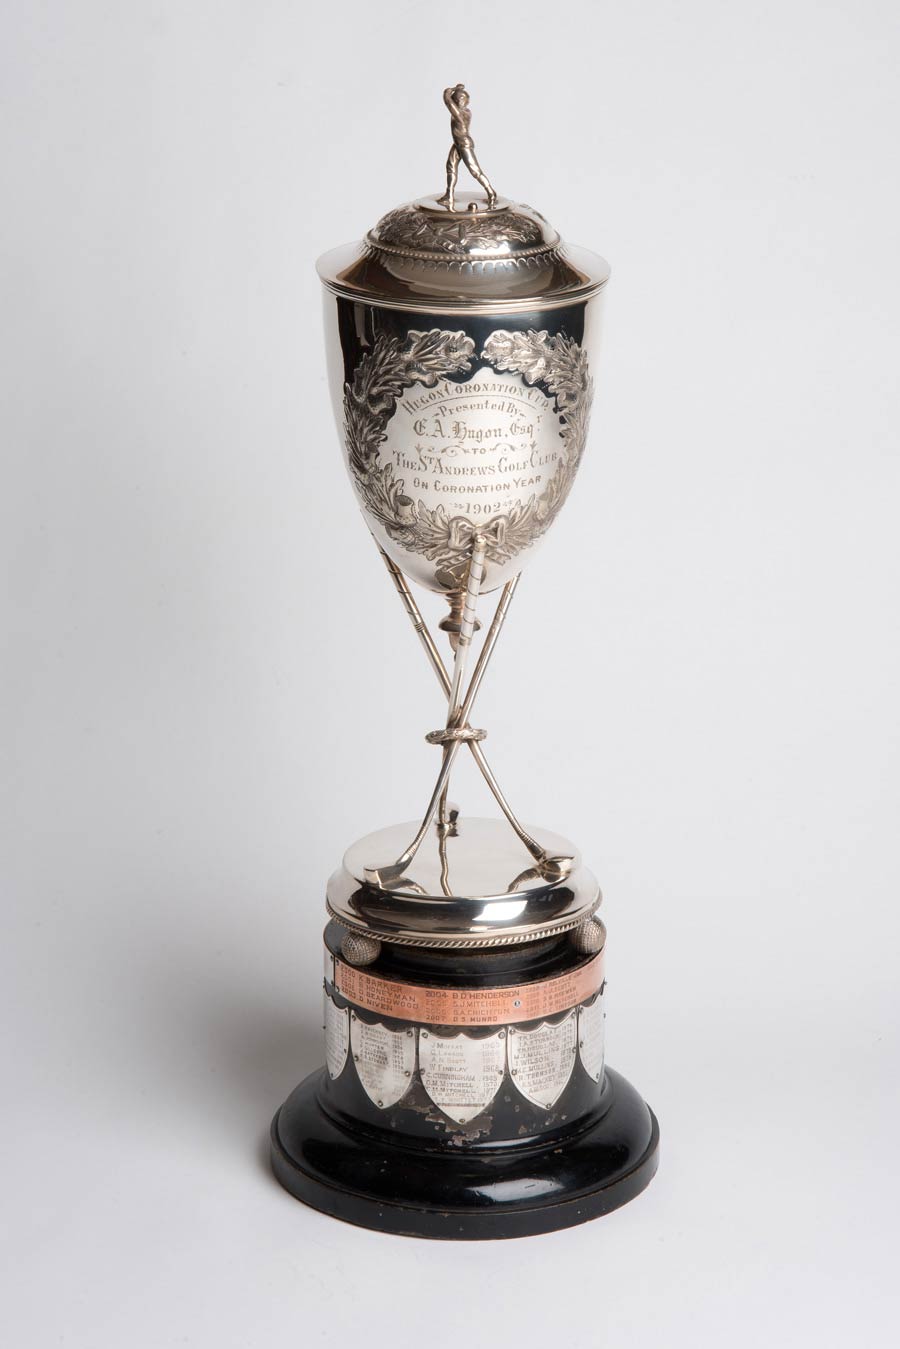 The Hugon Cup